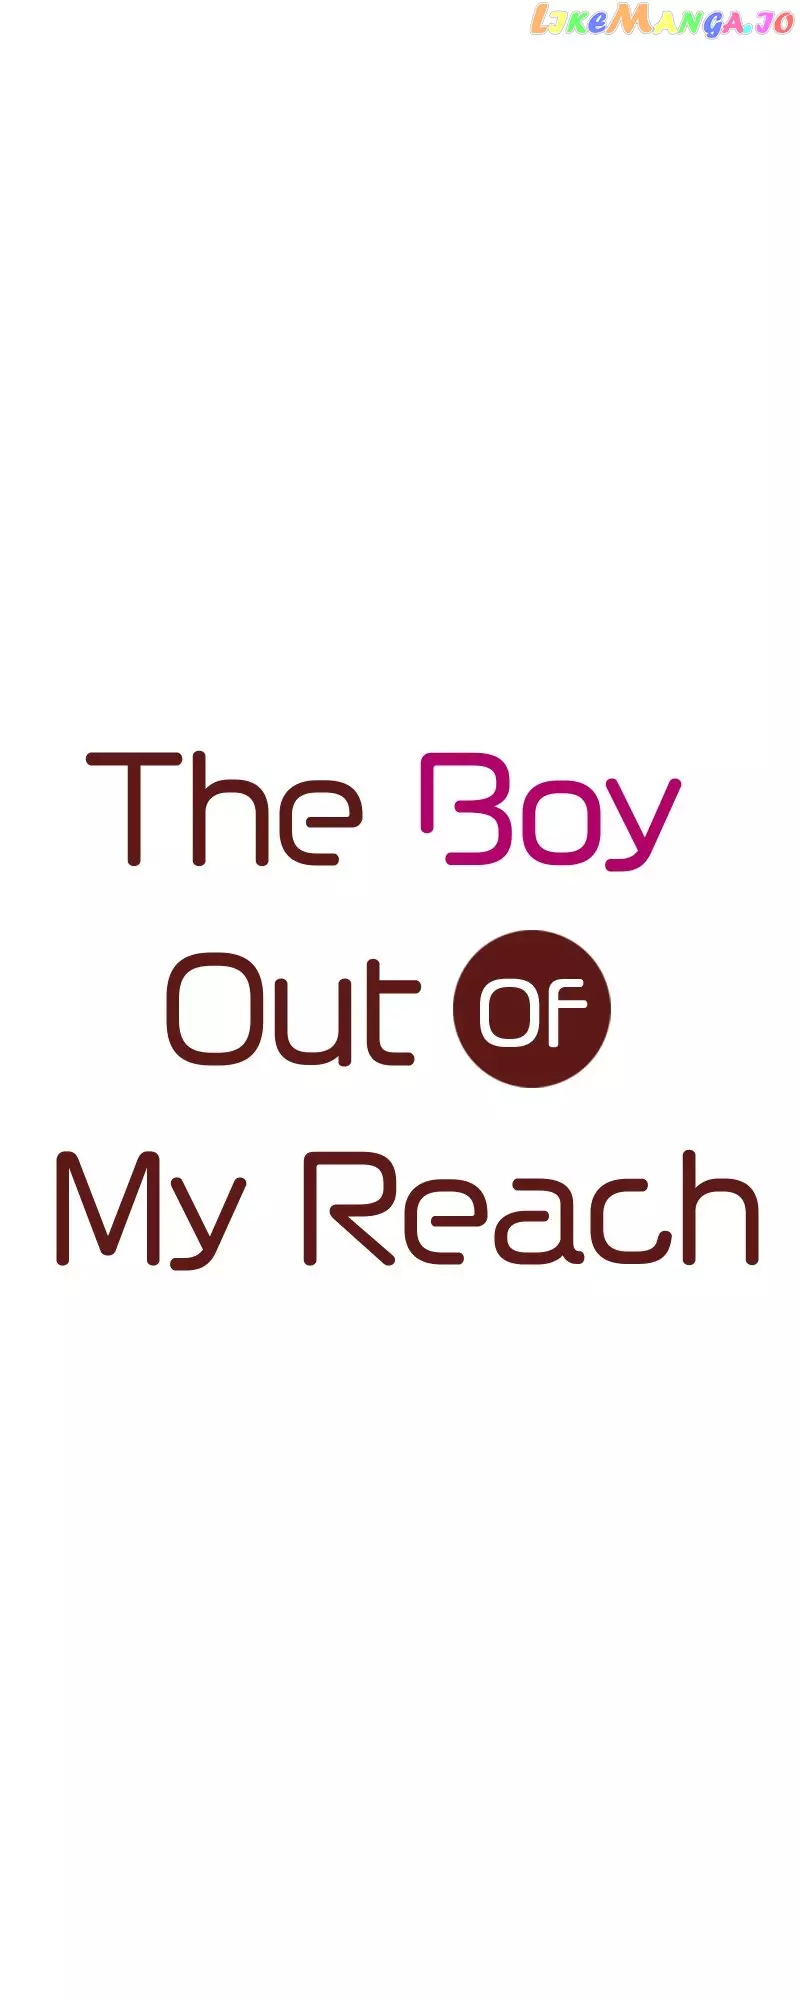 The Boy Out Of My Reach - 110 page 1-f4ba5b6b